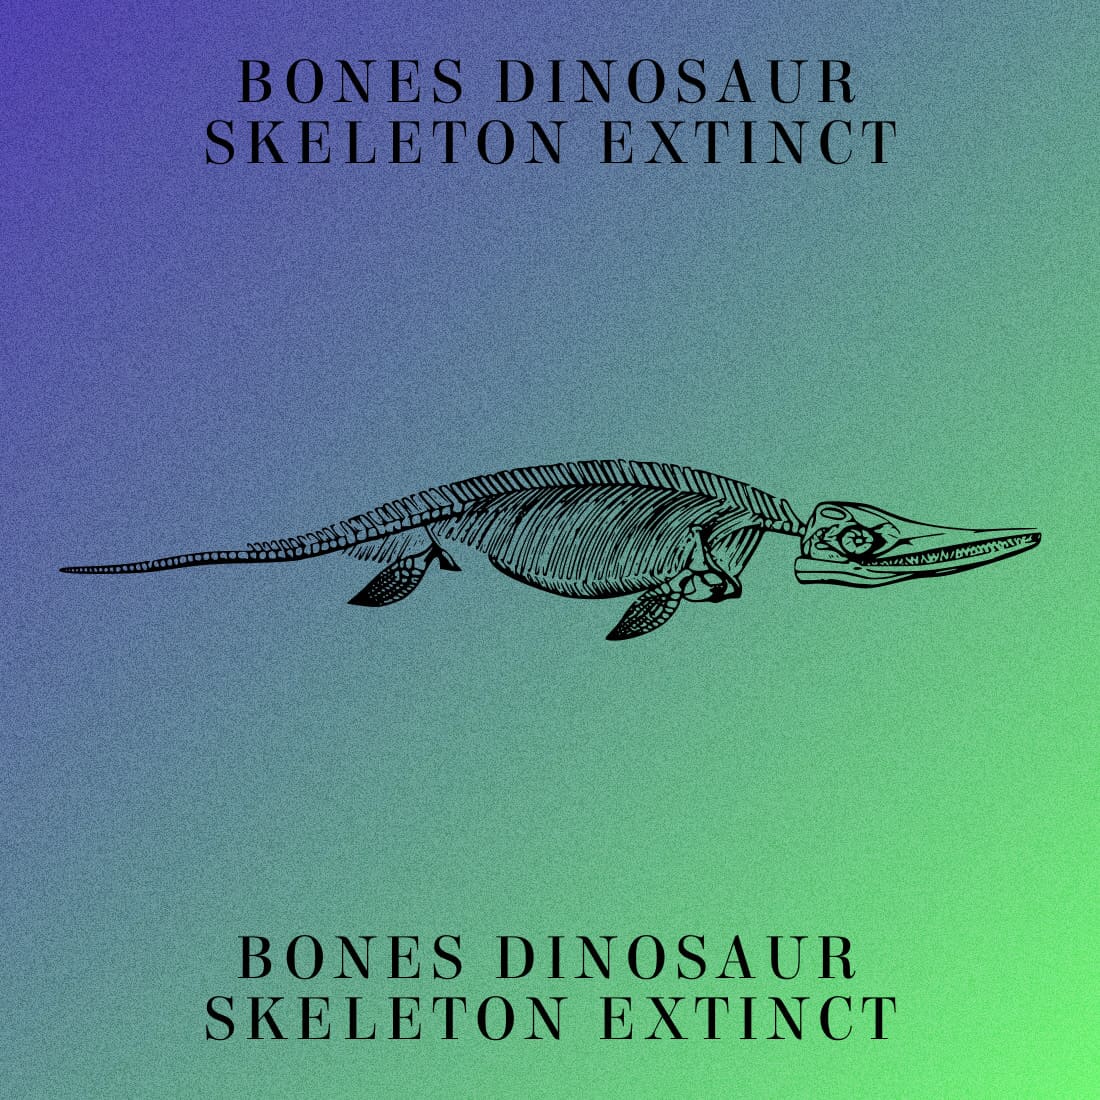 Bones Dinosaur Skeleton Extinct - Colorful Example.